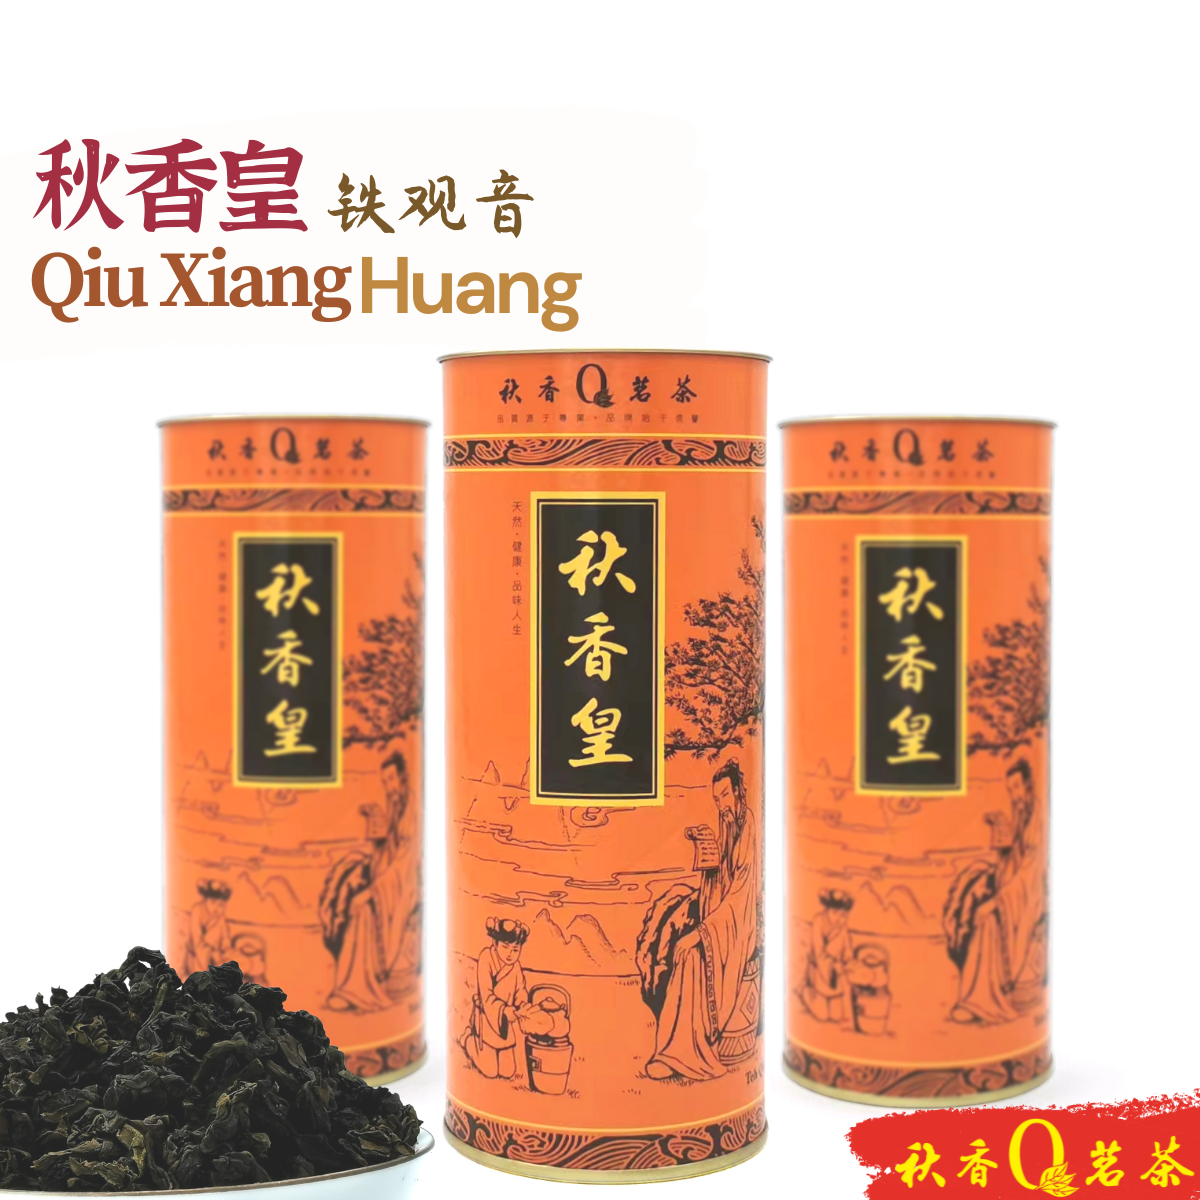 秋香皇 Qiu Xiang Huang tea (浓香 Caramel Fragrance)【150g】|【铁观音 Tie Guan Yin】